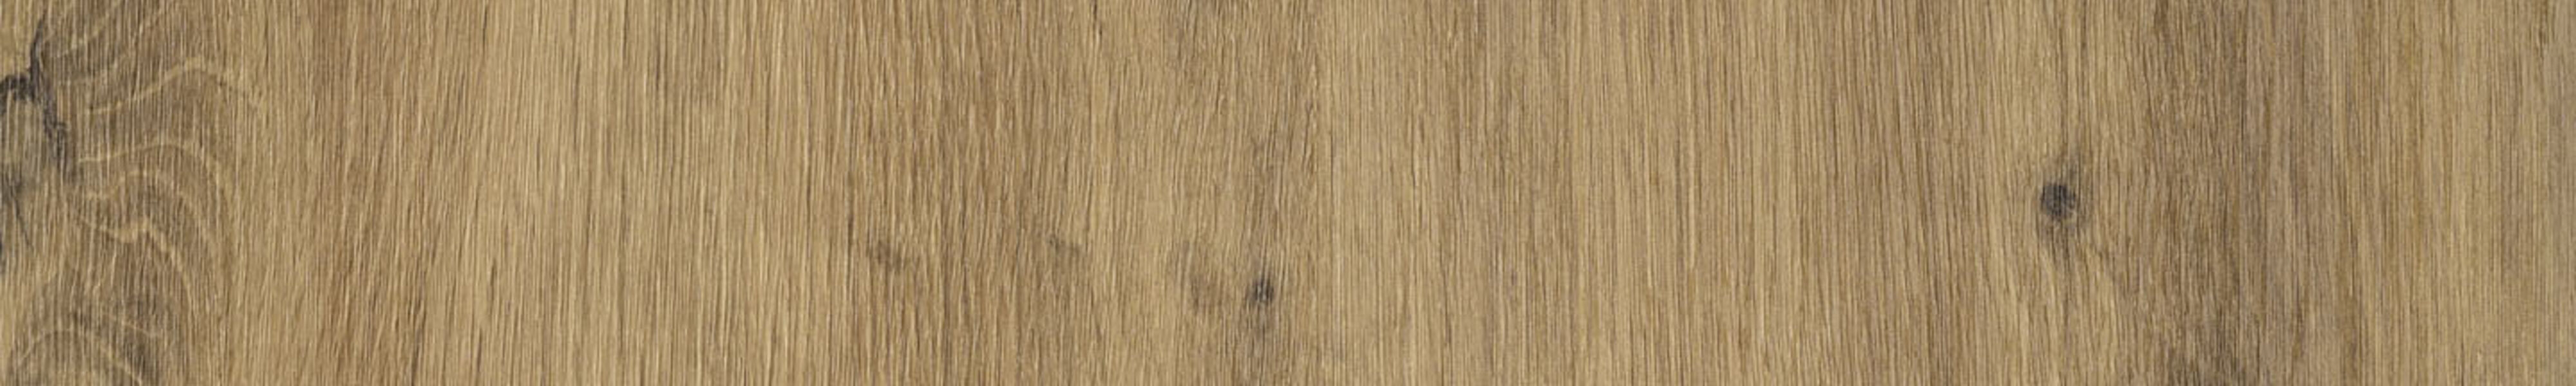 skai® structure Artisan Oak golden brown  0,43 1440